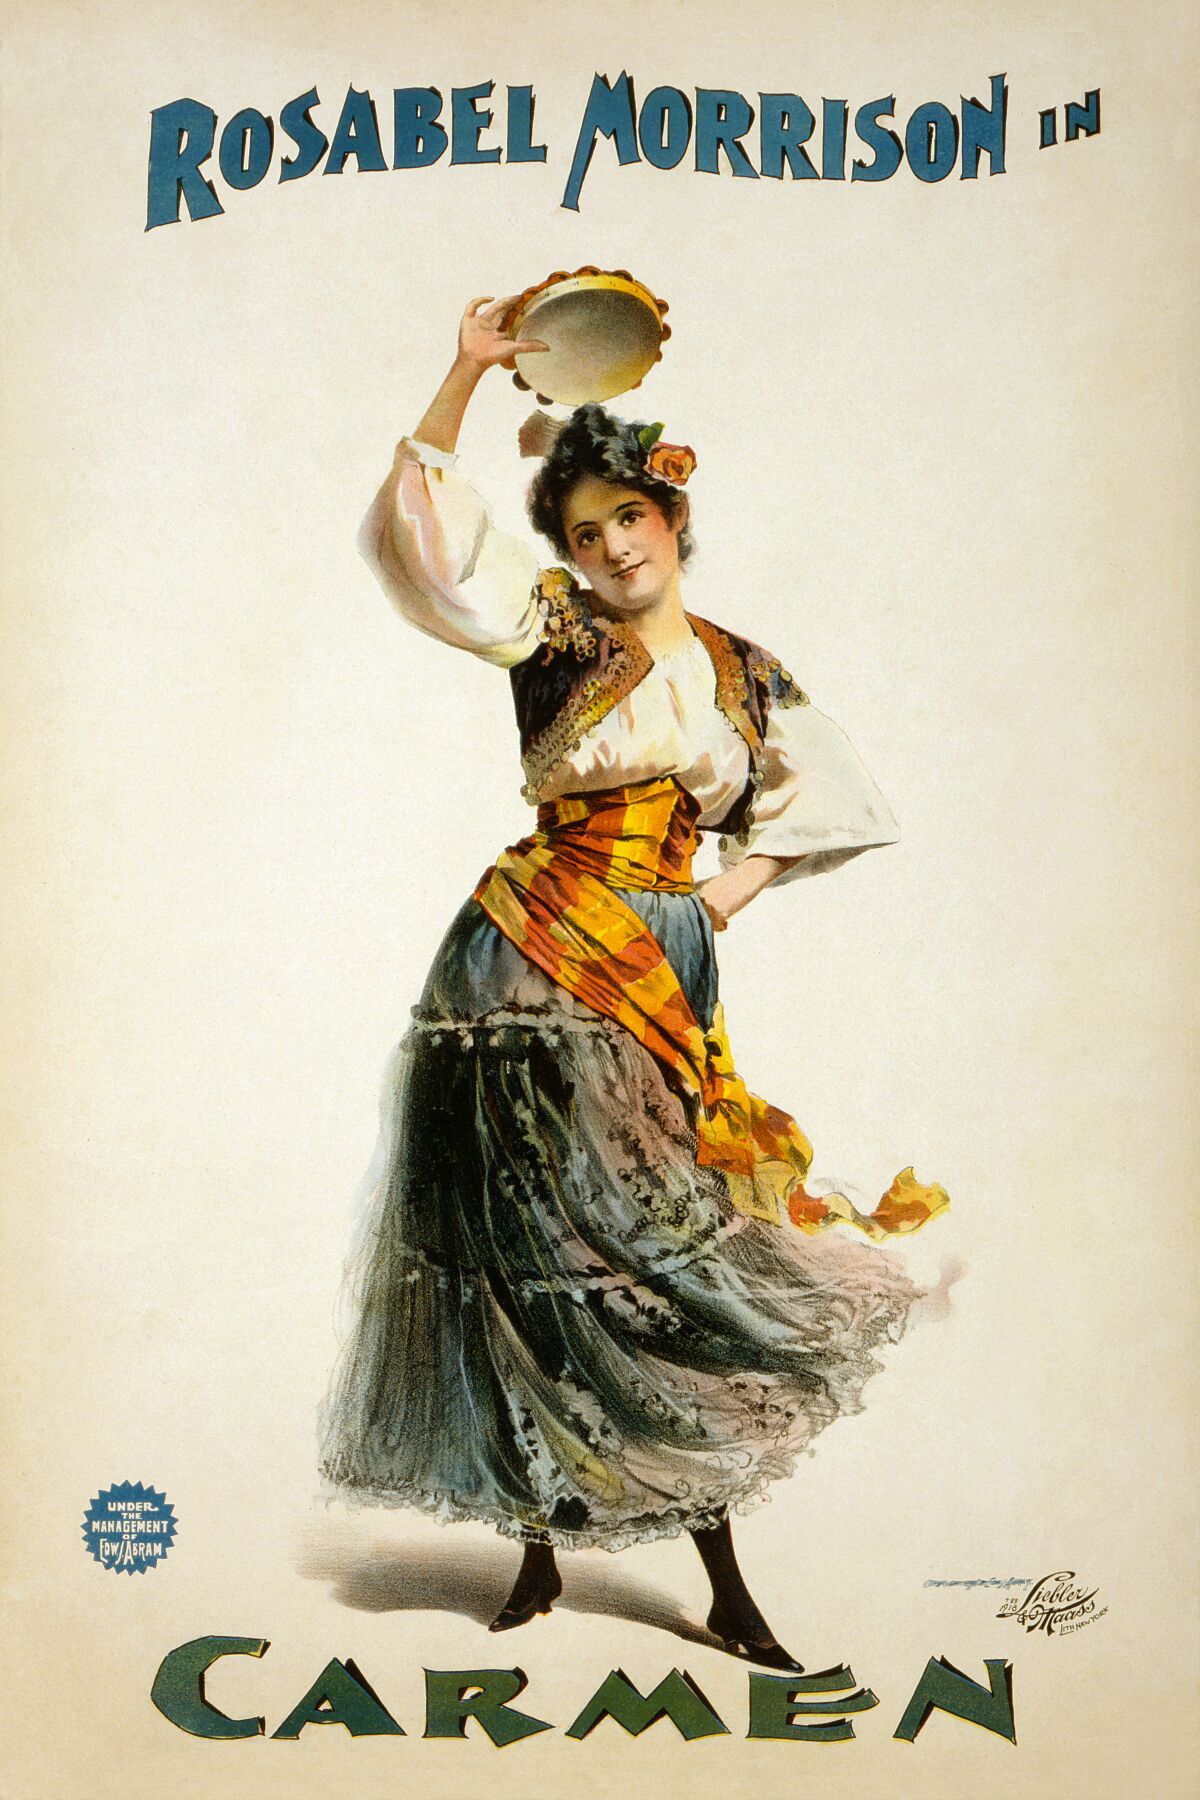 Poster for an 1896 dramatic adaptation of Carmen, starring Rosabel Morrison